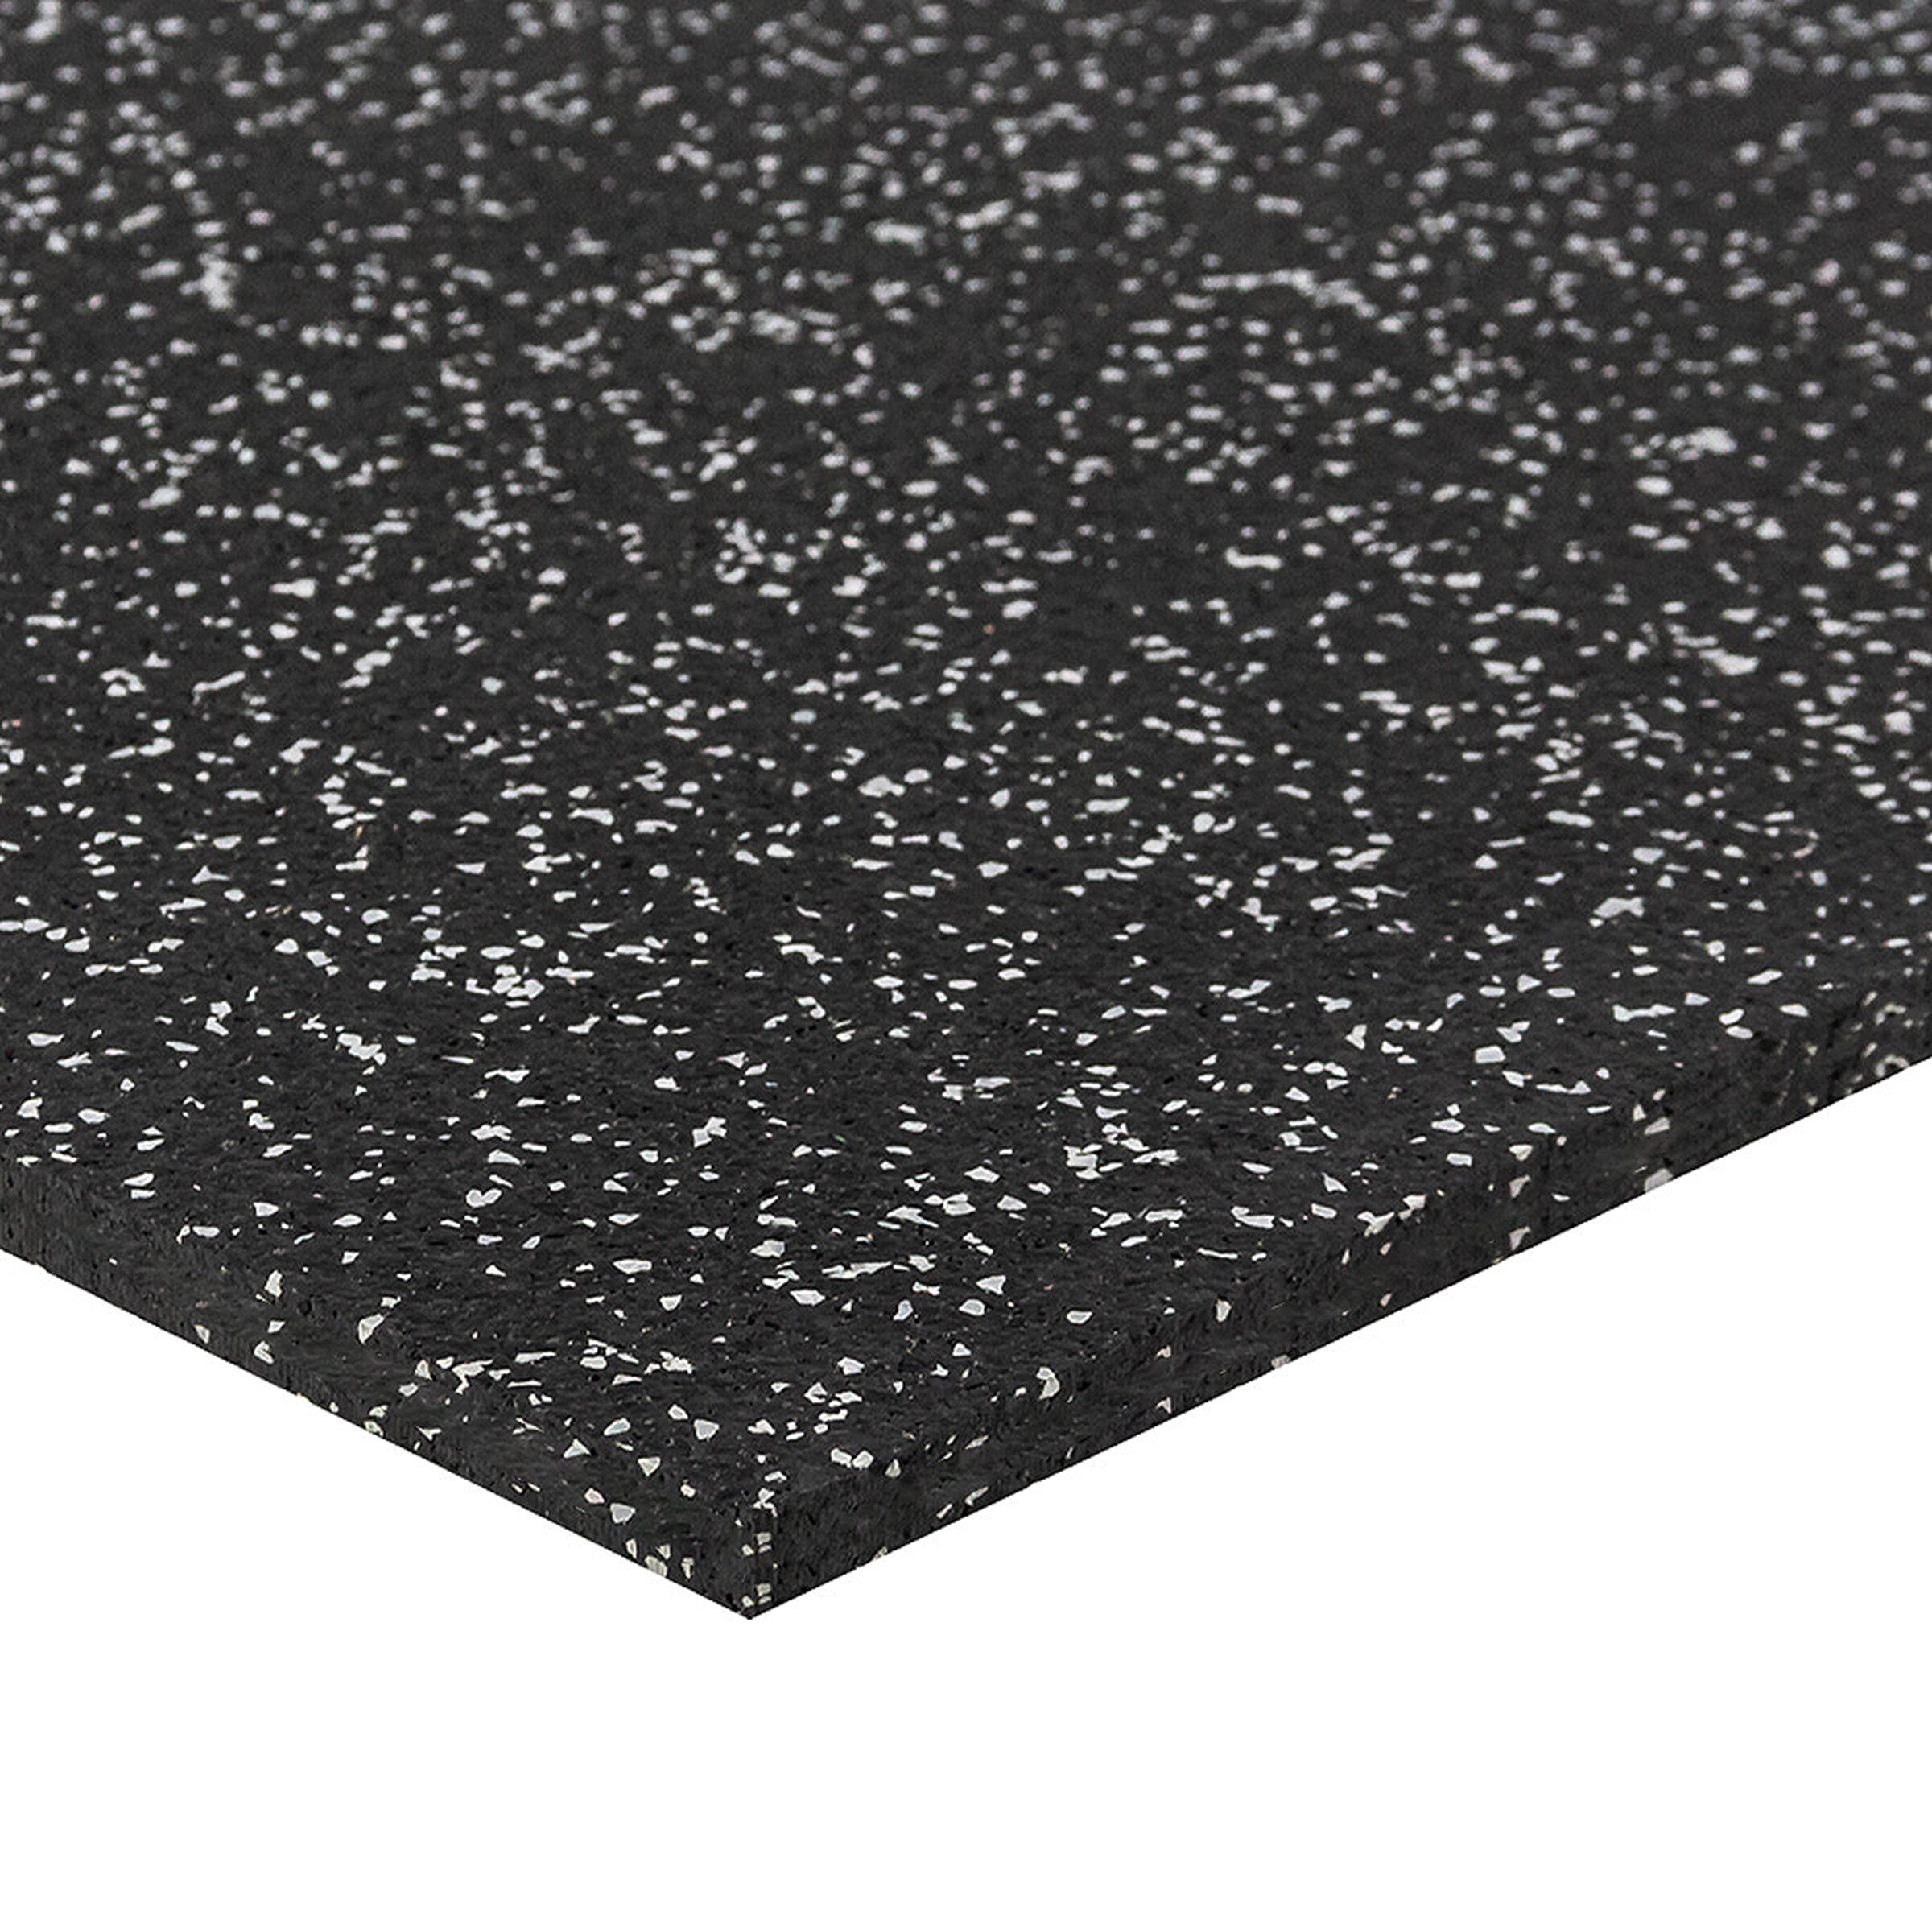 Černo-šedá podlahová guma (puzzle - střed) FLOMA FitFlo SF1050 - délka 50 cm, šířka 50 cm, výška 1,6 cm